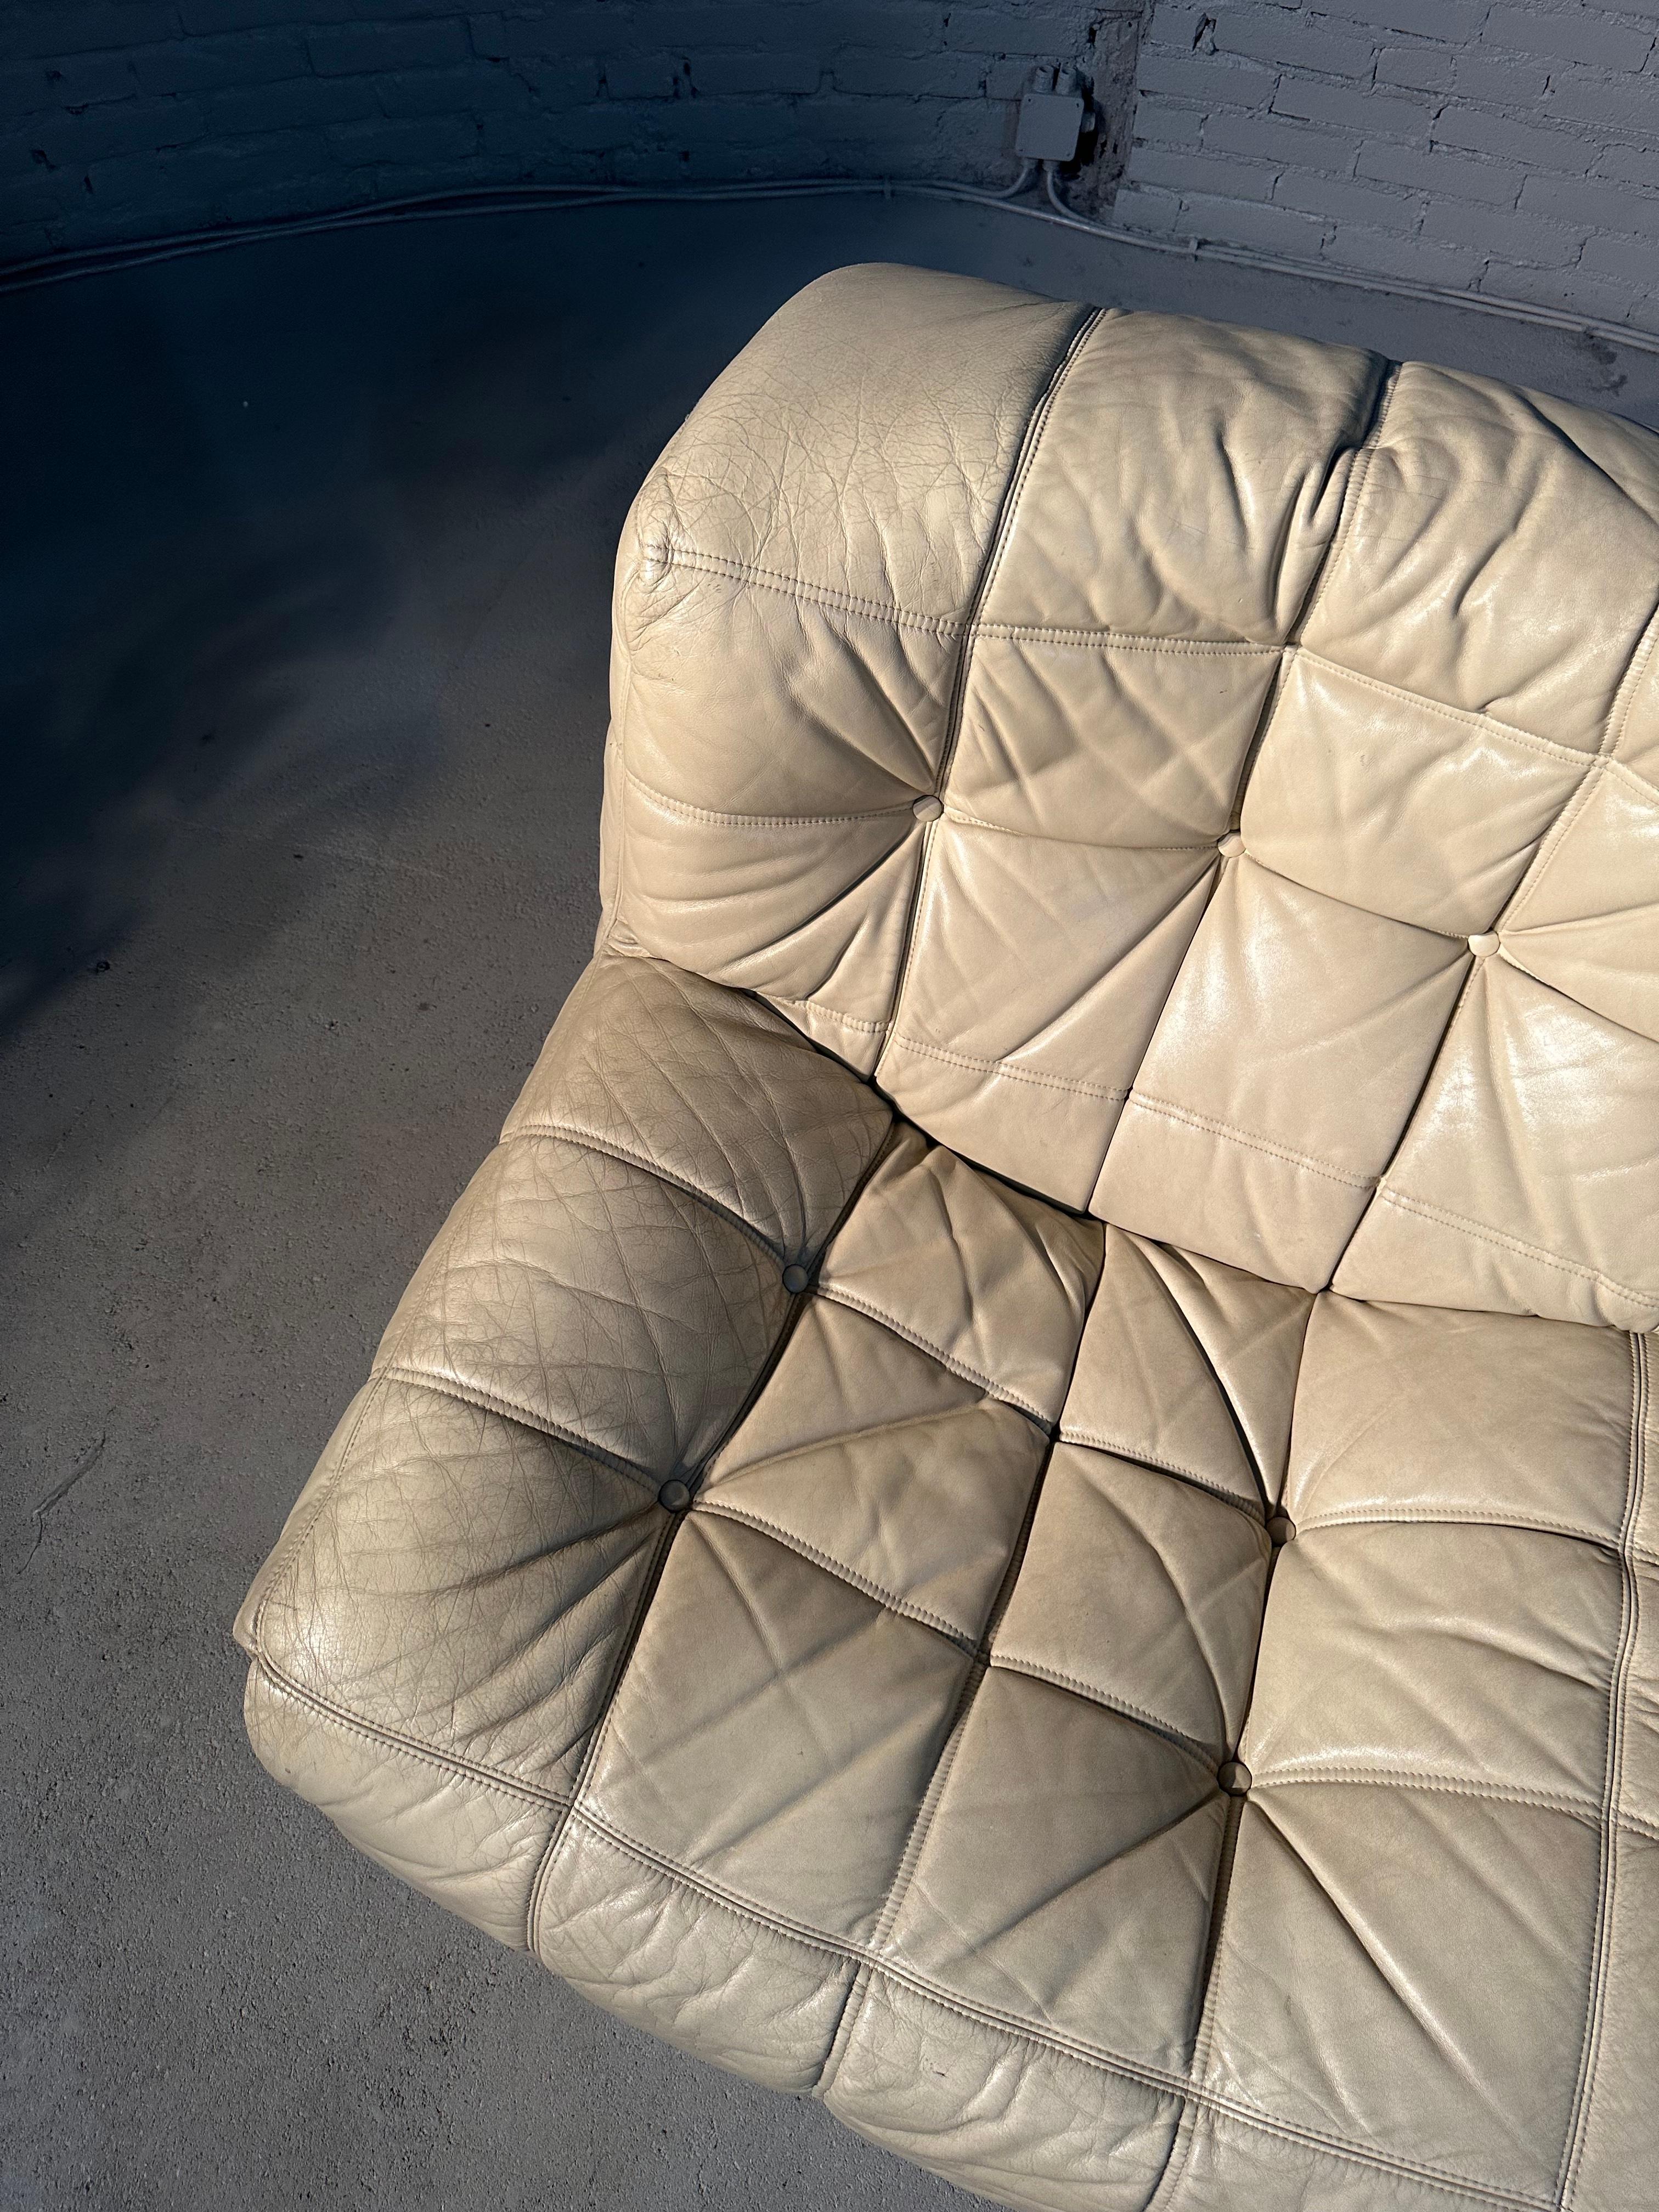 kashima sofa re-edition michel ducaroy for ligne roset